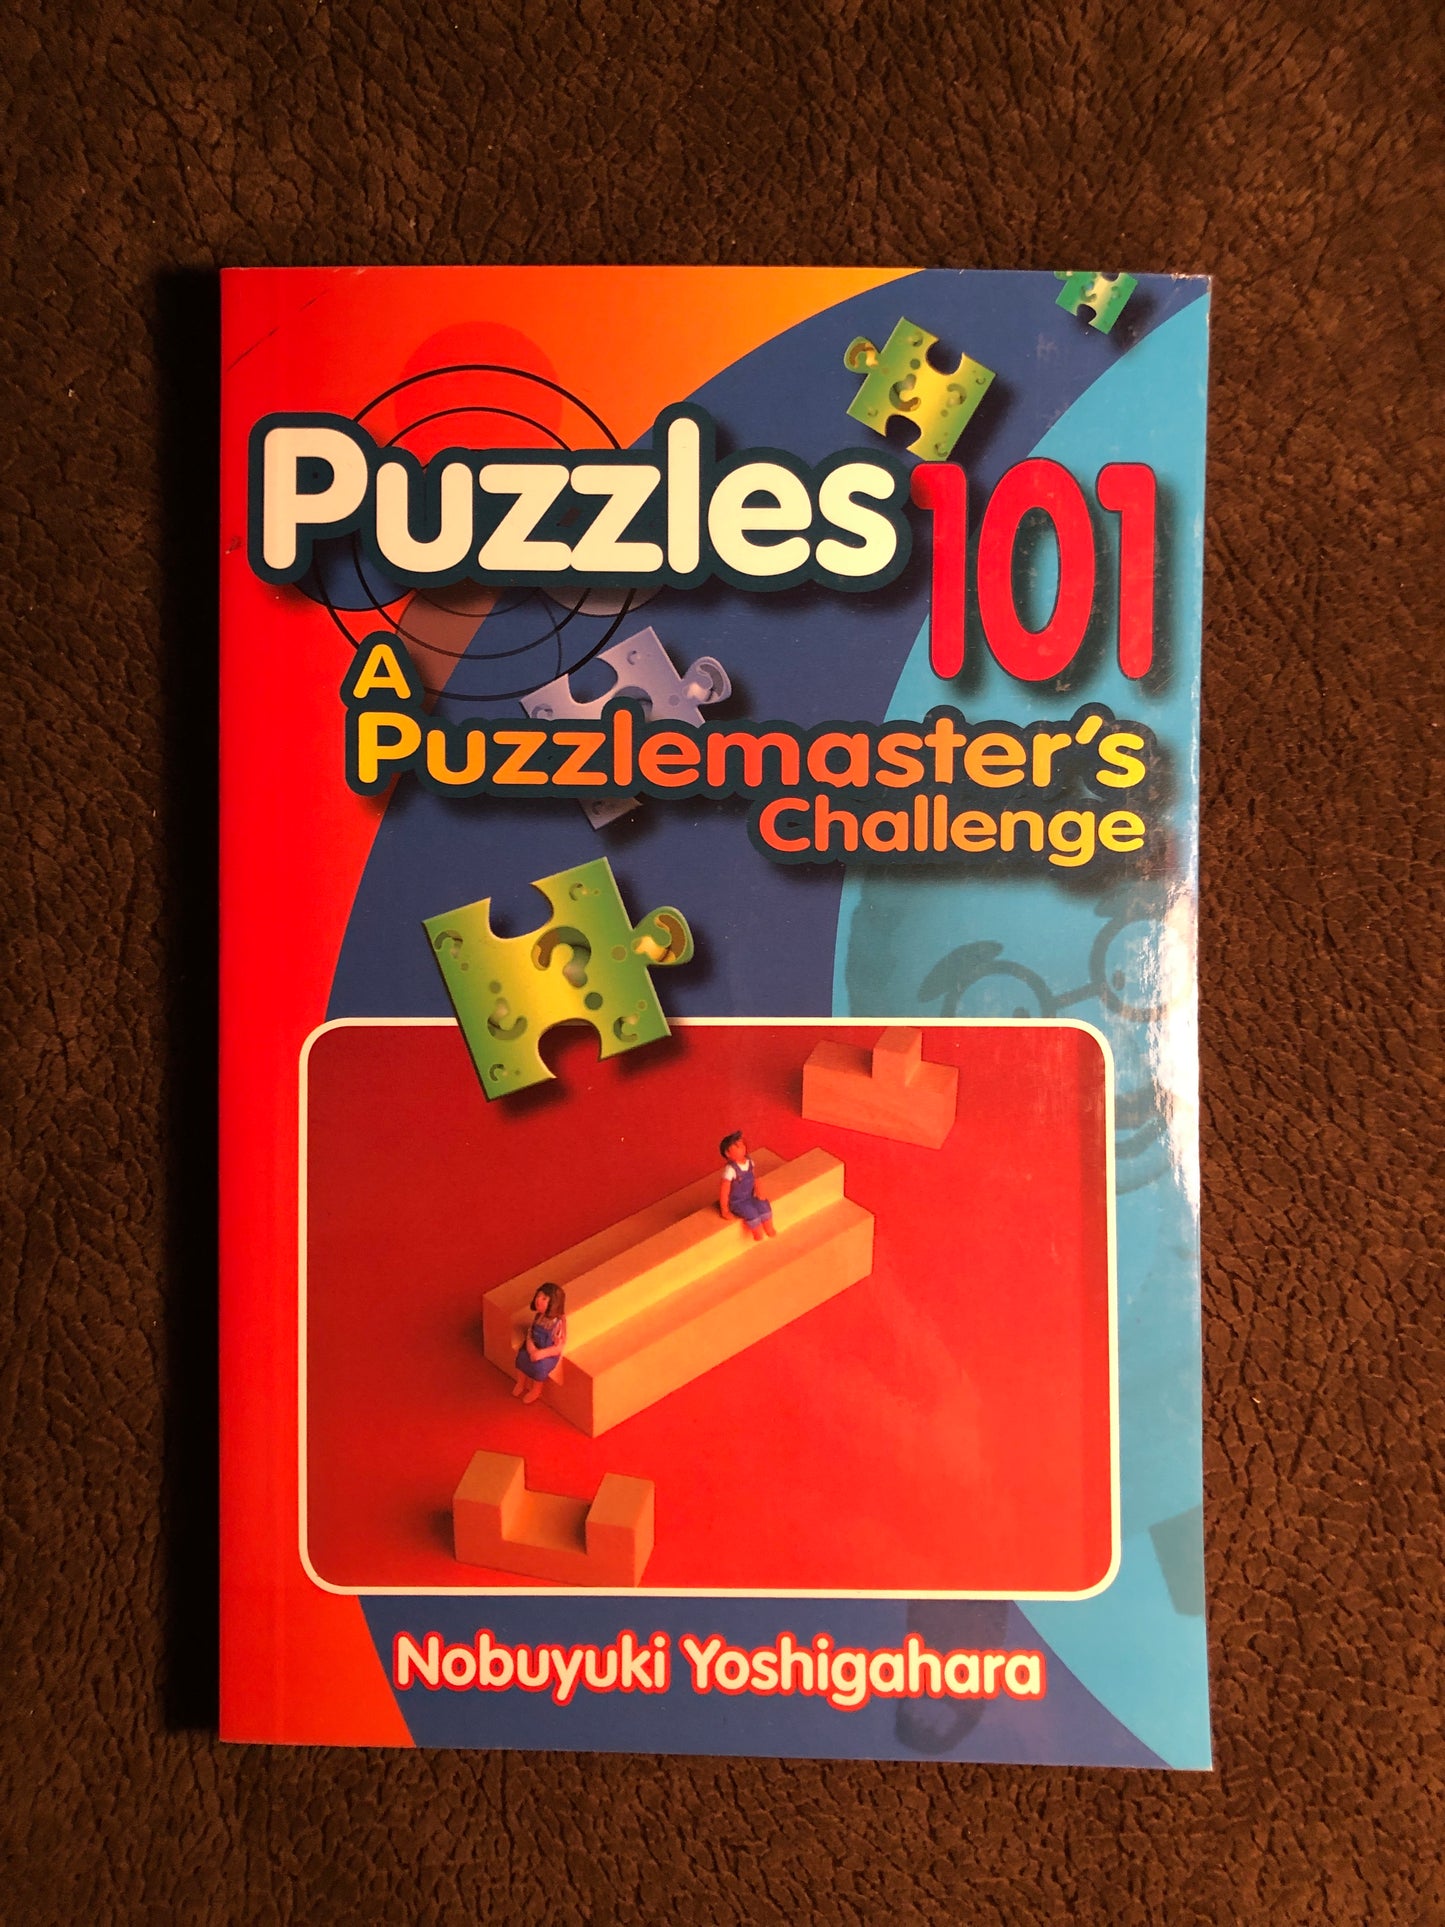 Puzzles 101, A Puzzlemaster's Challenge - Nonbuyuki Yoshigahara